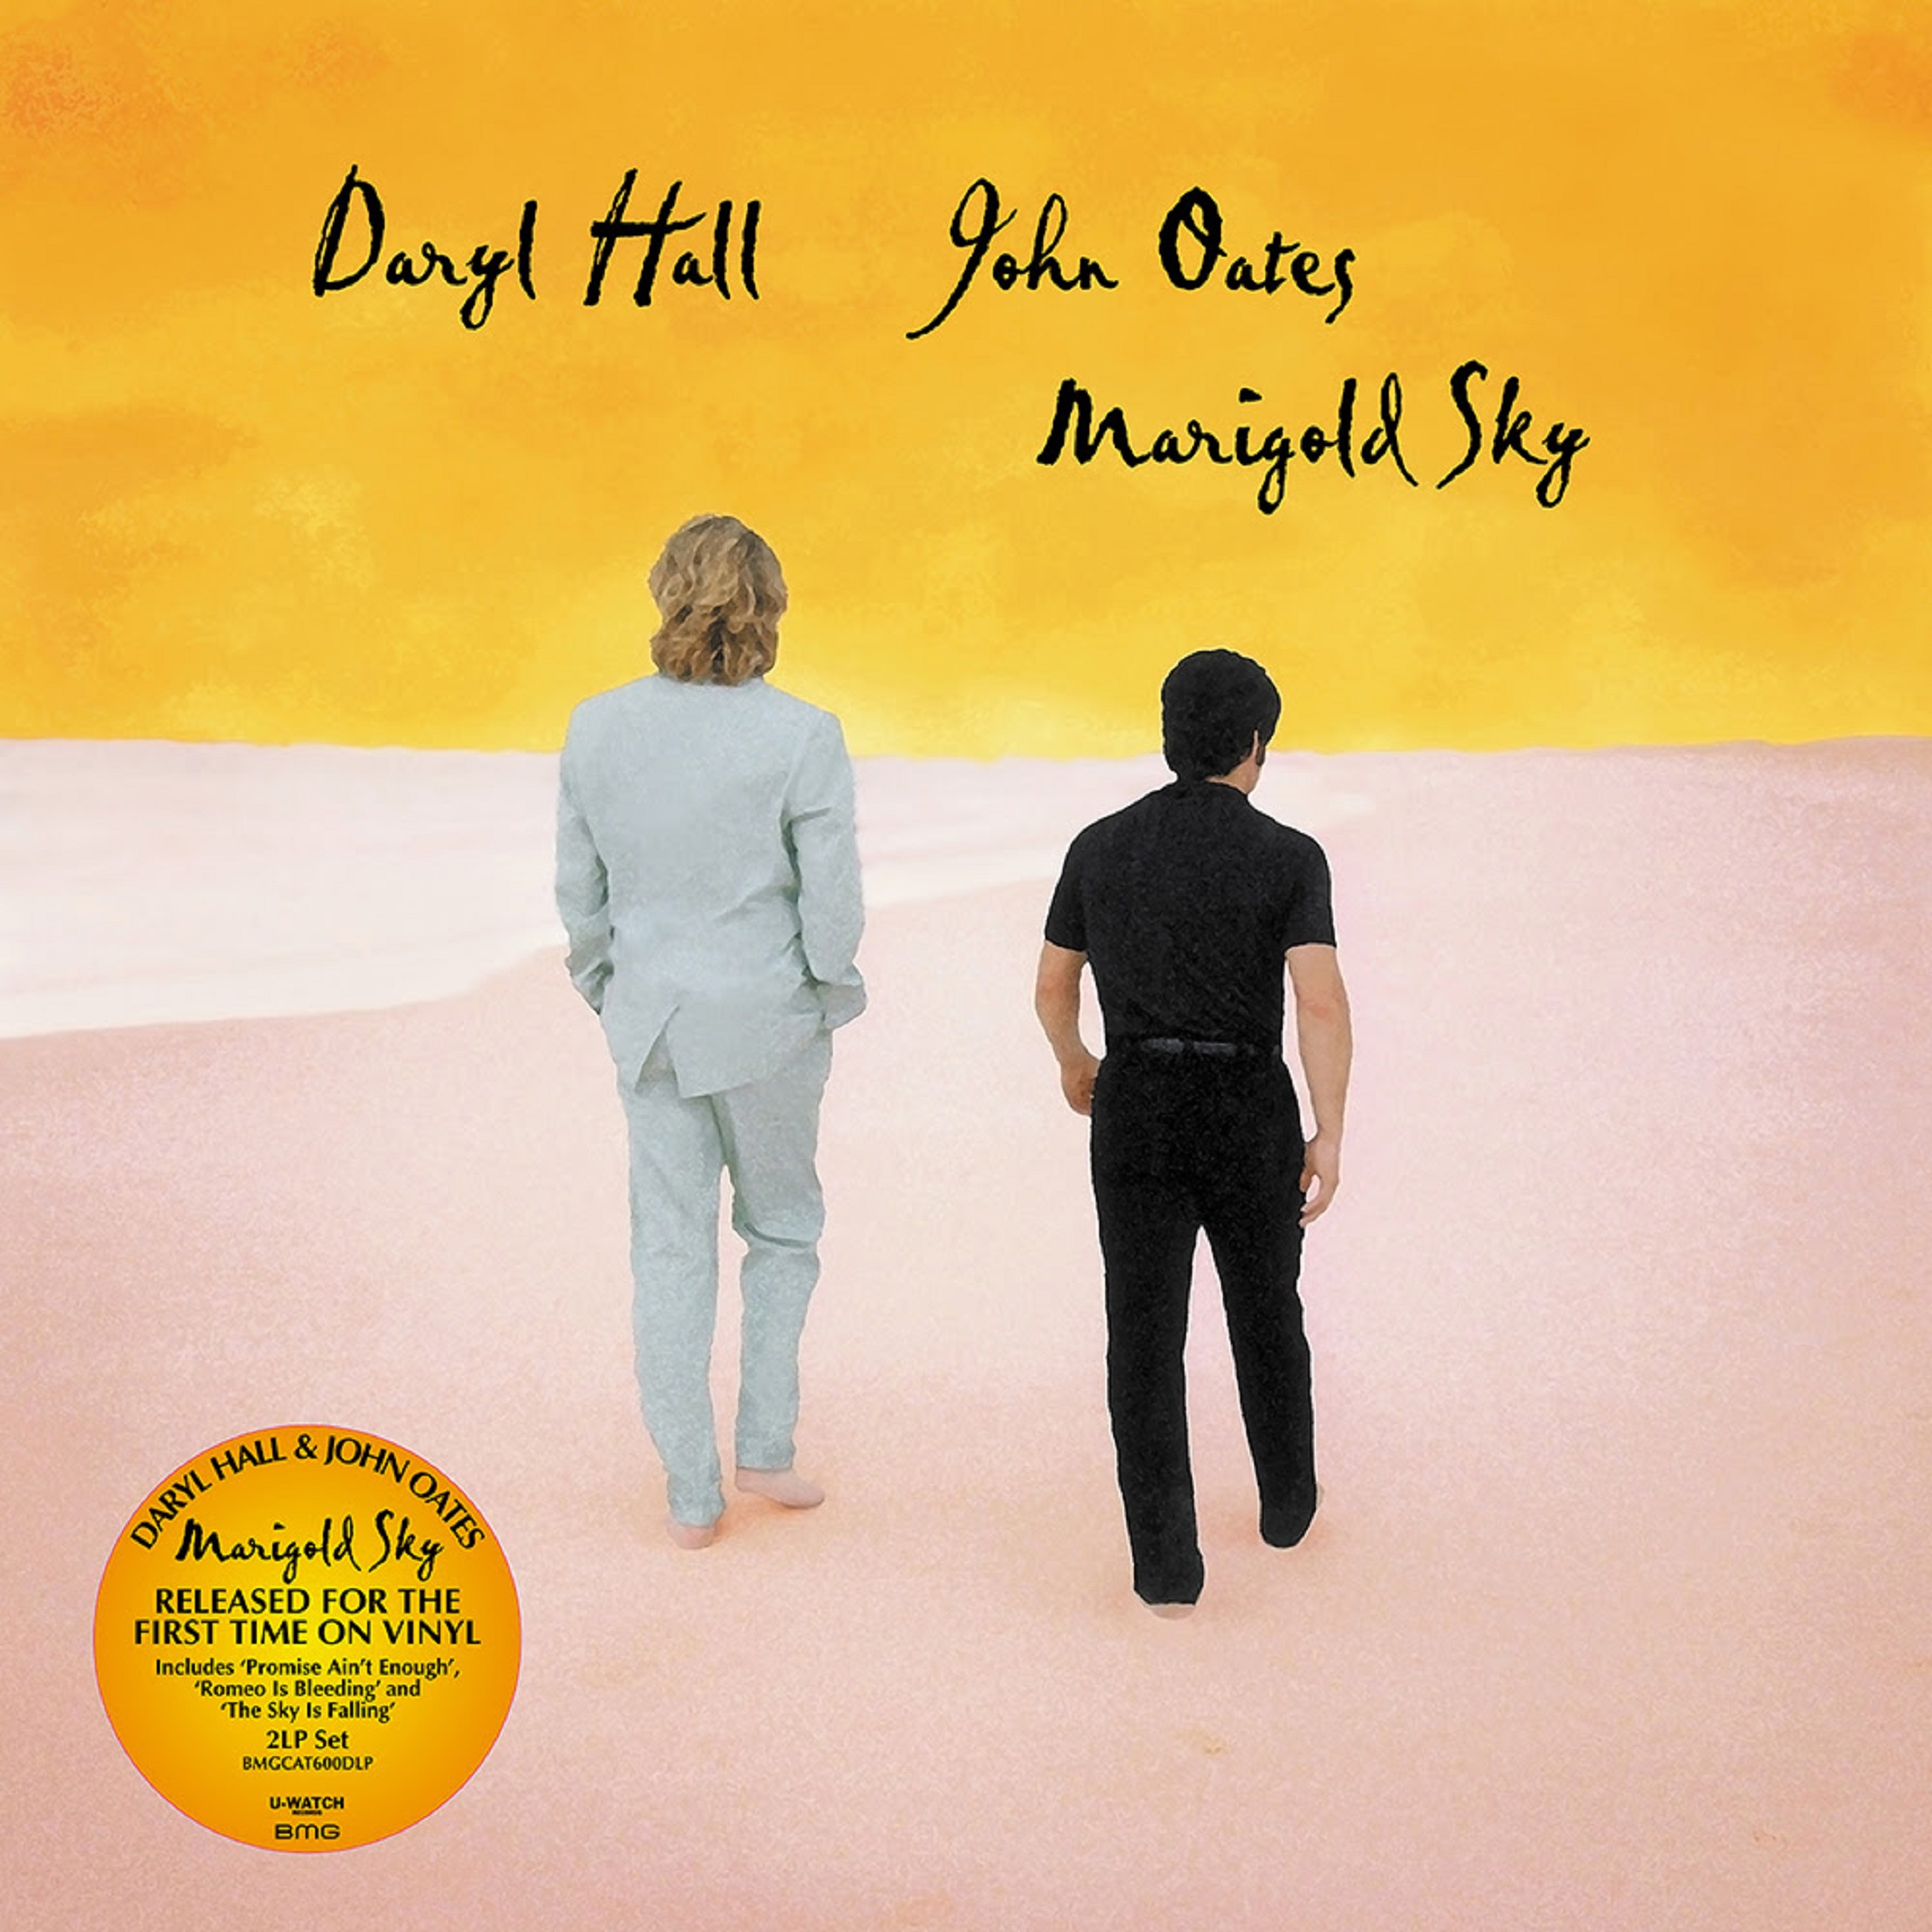 DARYL HALL AND JOHN OATES Release 1997 Album 'Marigold Sky' on Vinyl